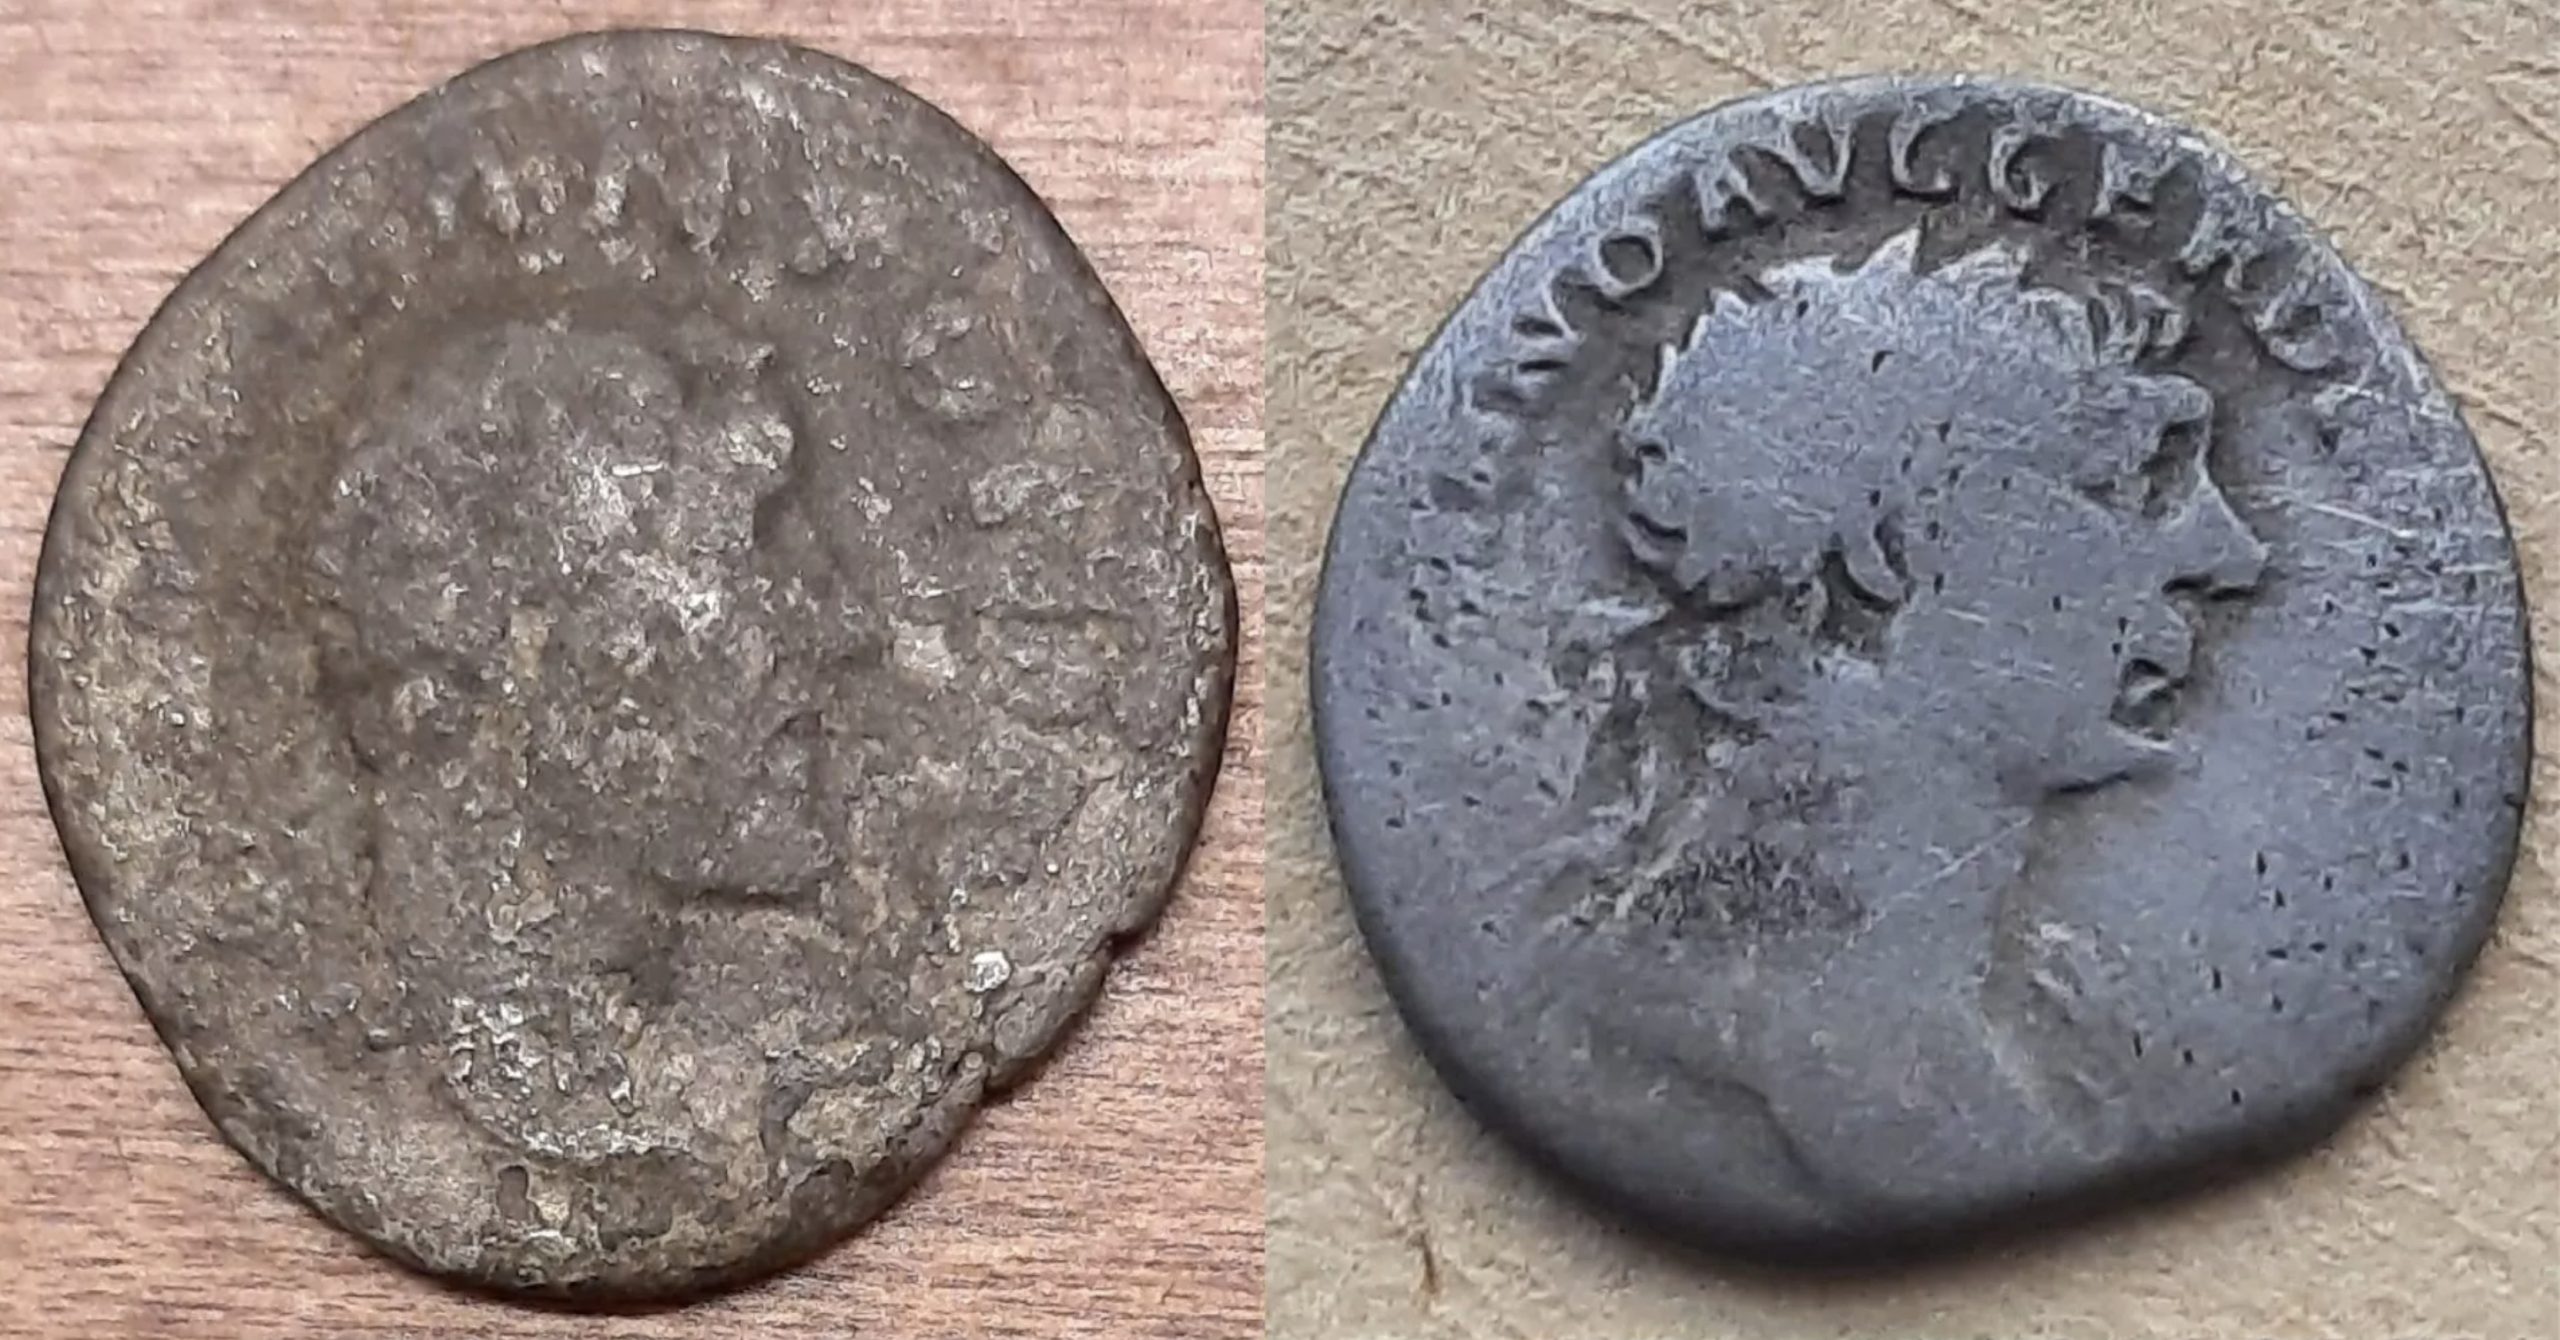 Photograph of the Roman Coins. Credit: Image credit: Johan Rönnby.